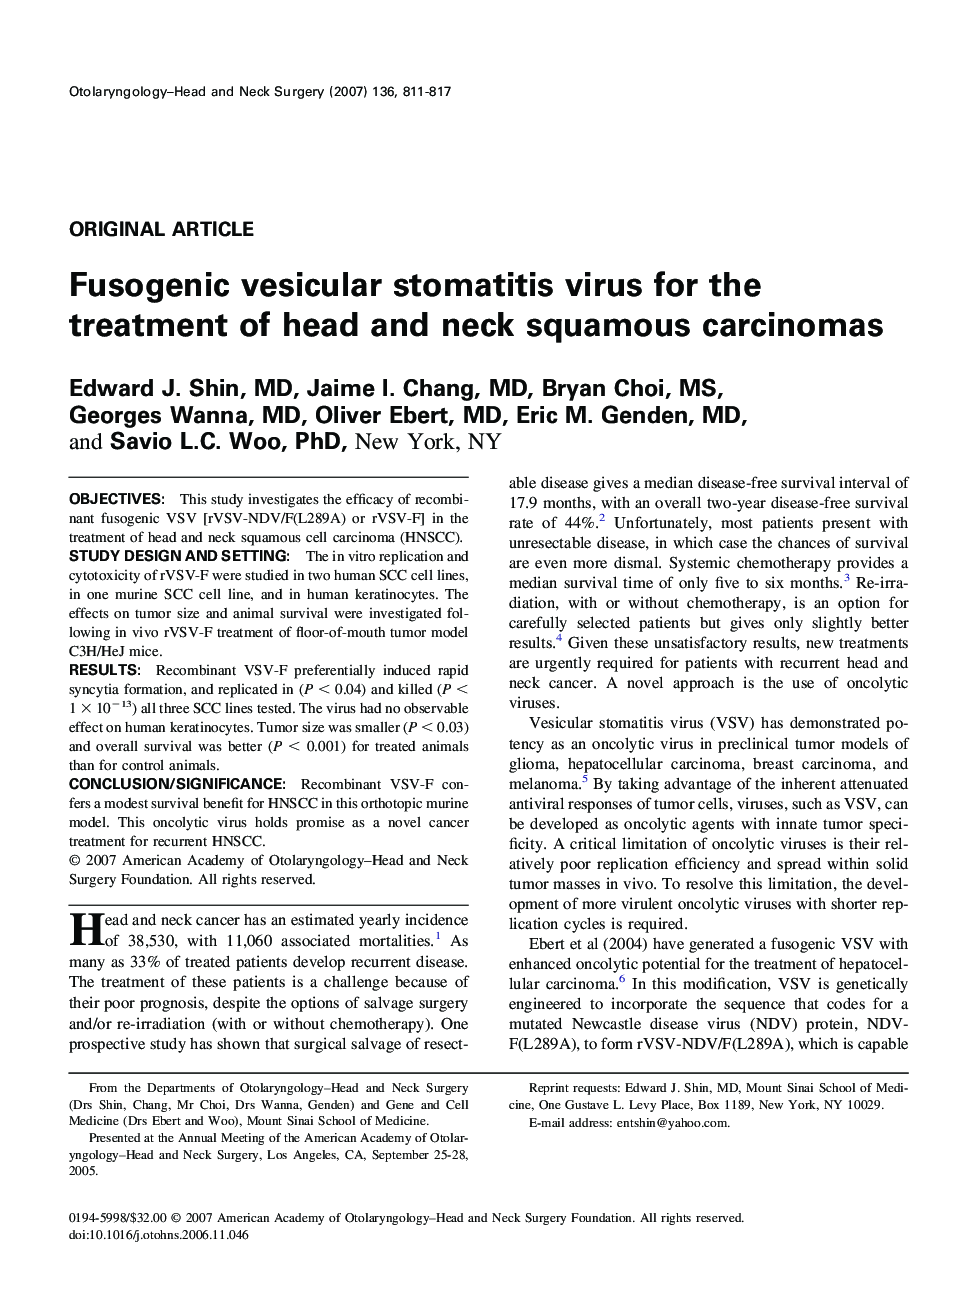 Fusogenic vesicular stomatitis virus for the treatment of head and neck squamous carcinomas